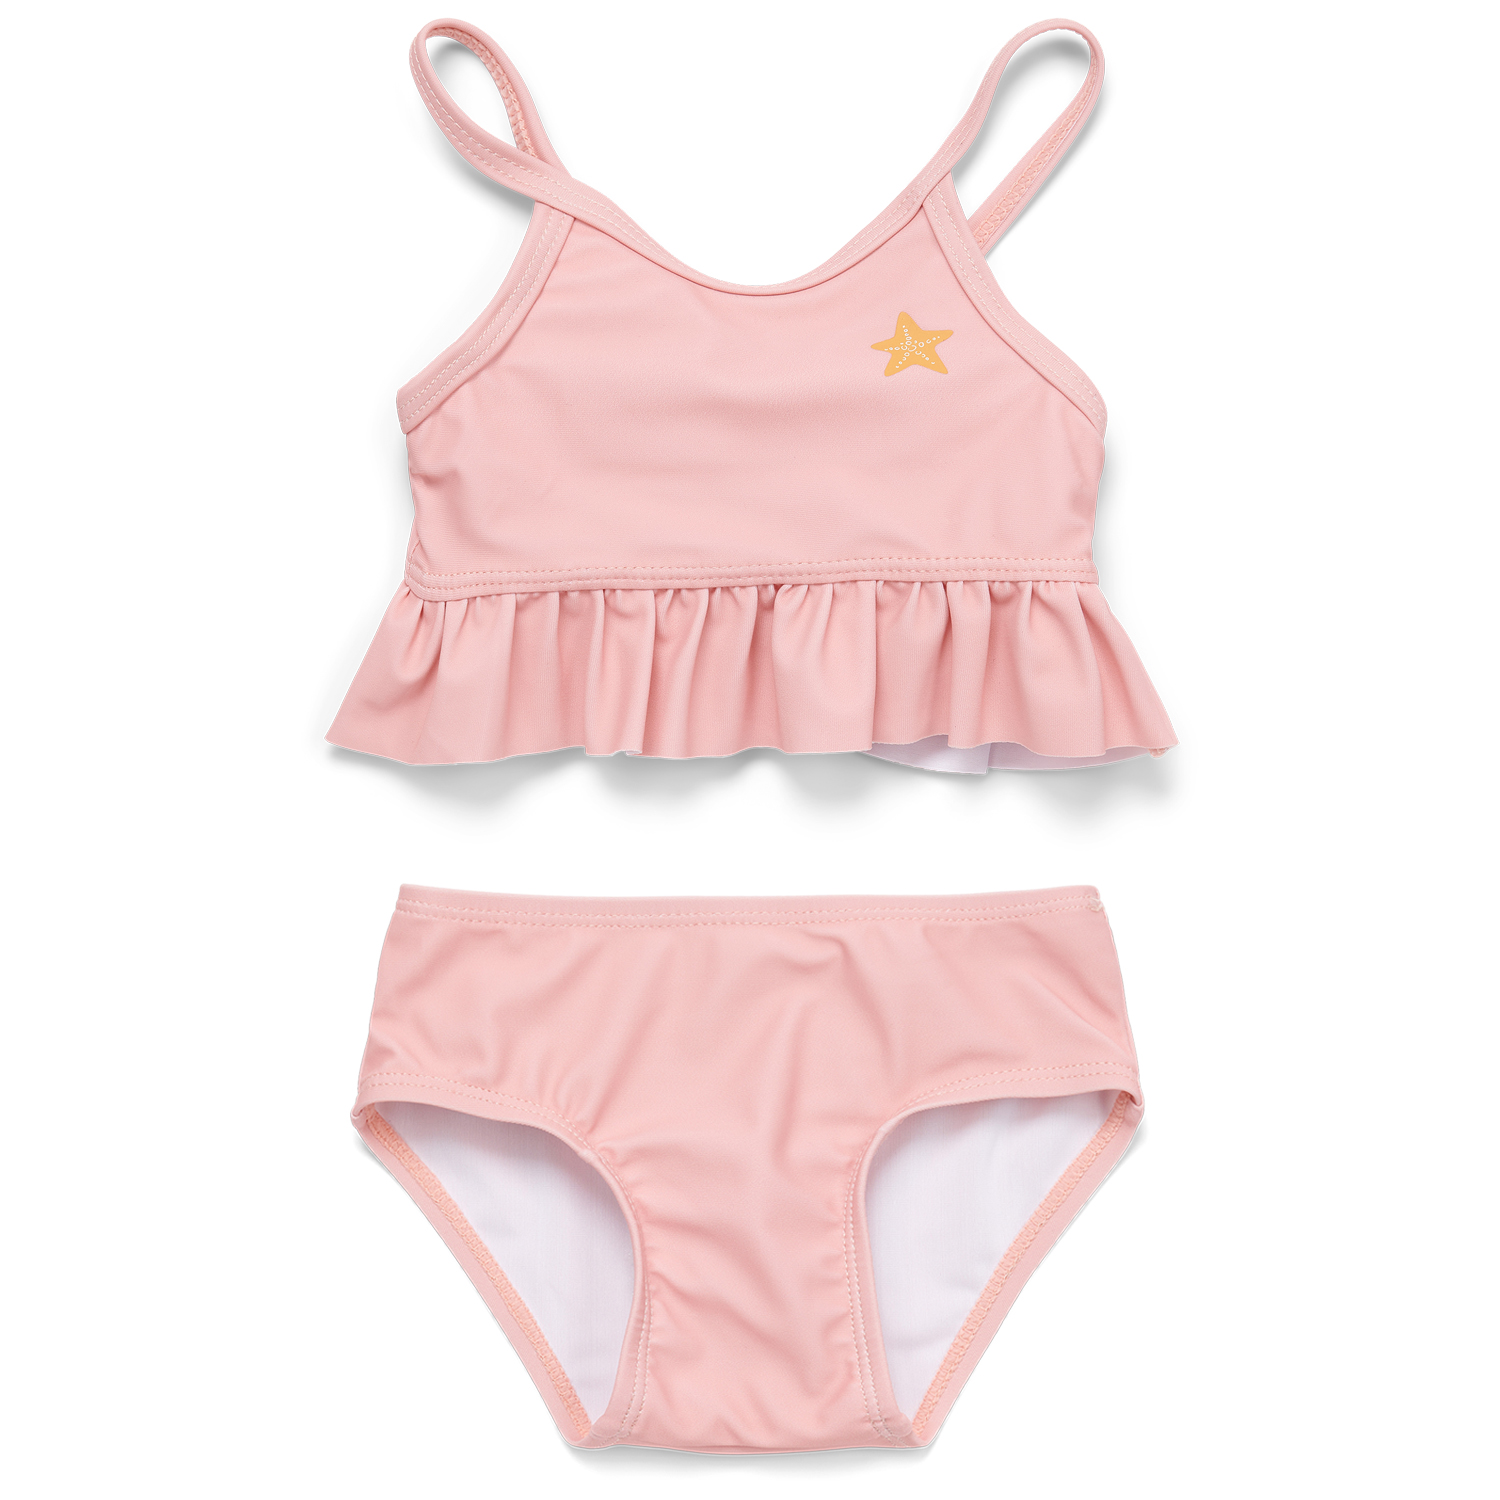 Bikini mit Volants / Rüschen Starfish Pink rosa (Gr. 62/68)